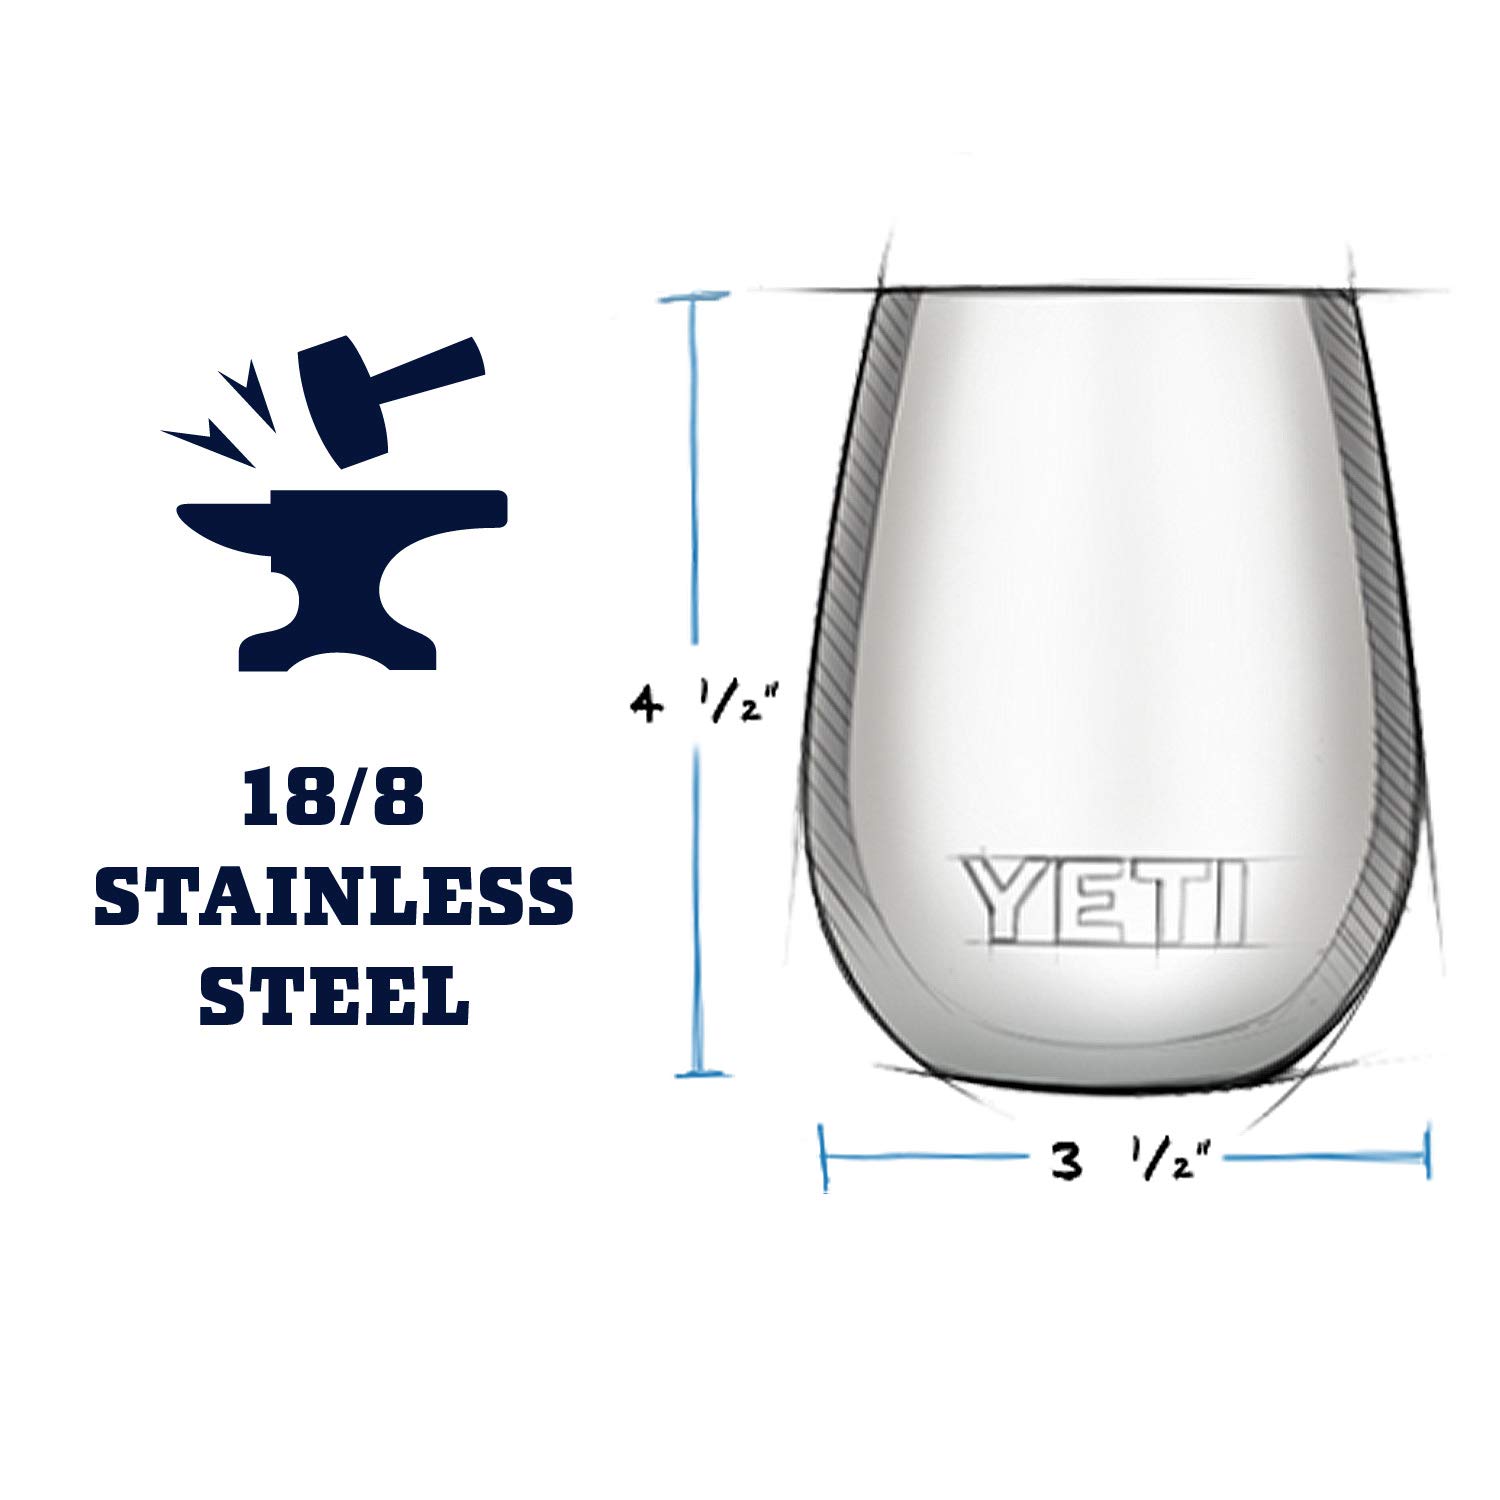 YETI Wine Rambler 10 oz Stainless Steel Vacuum Insulated Tumbler, Seafoam